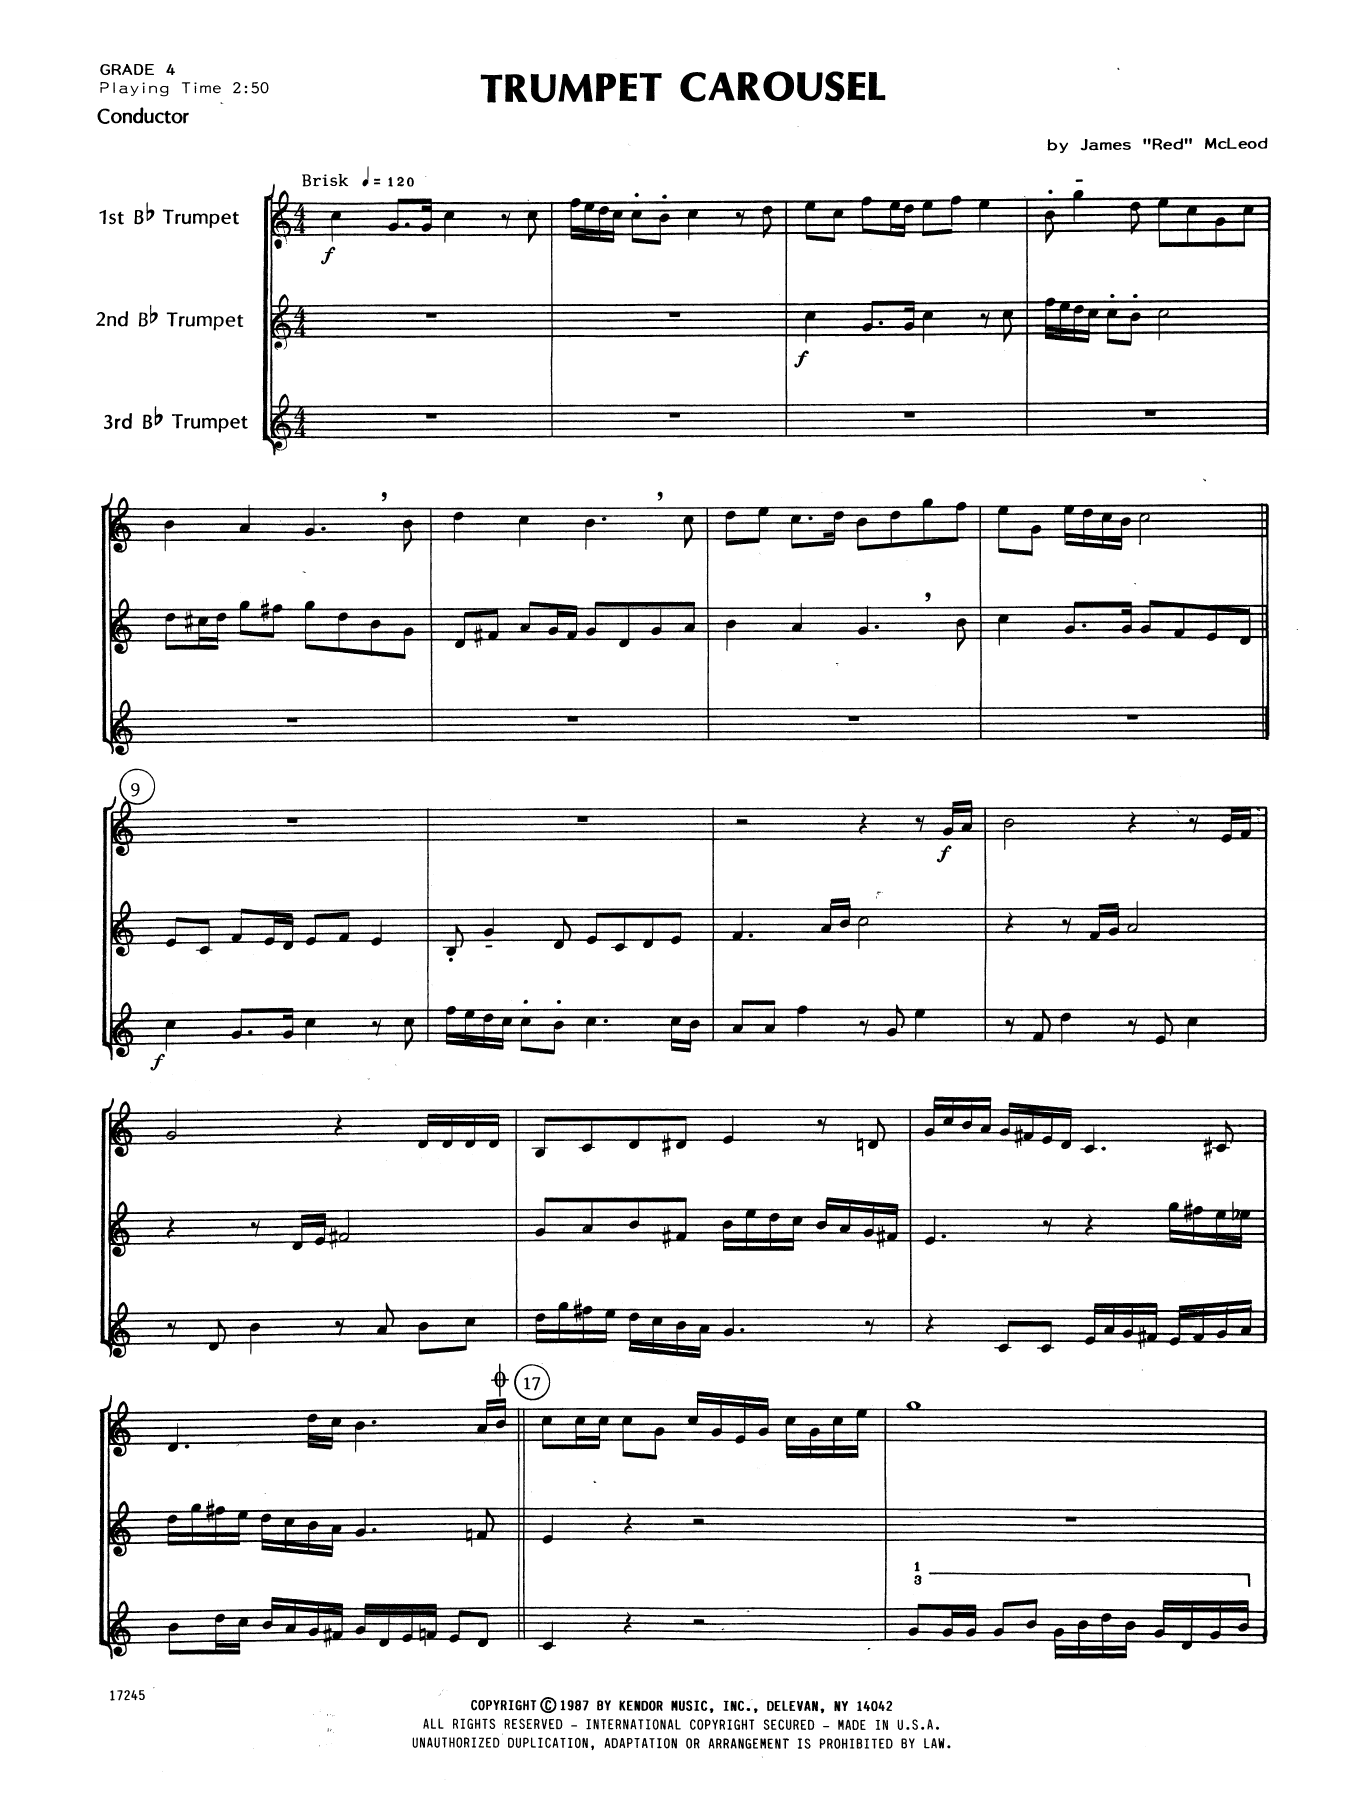 Download James 'Red' McLeod Trumpet Carousel - Full Score Sheet Music